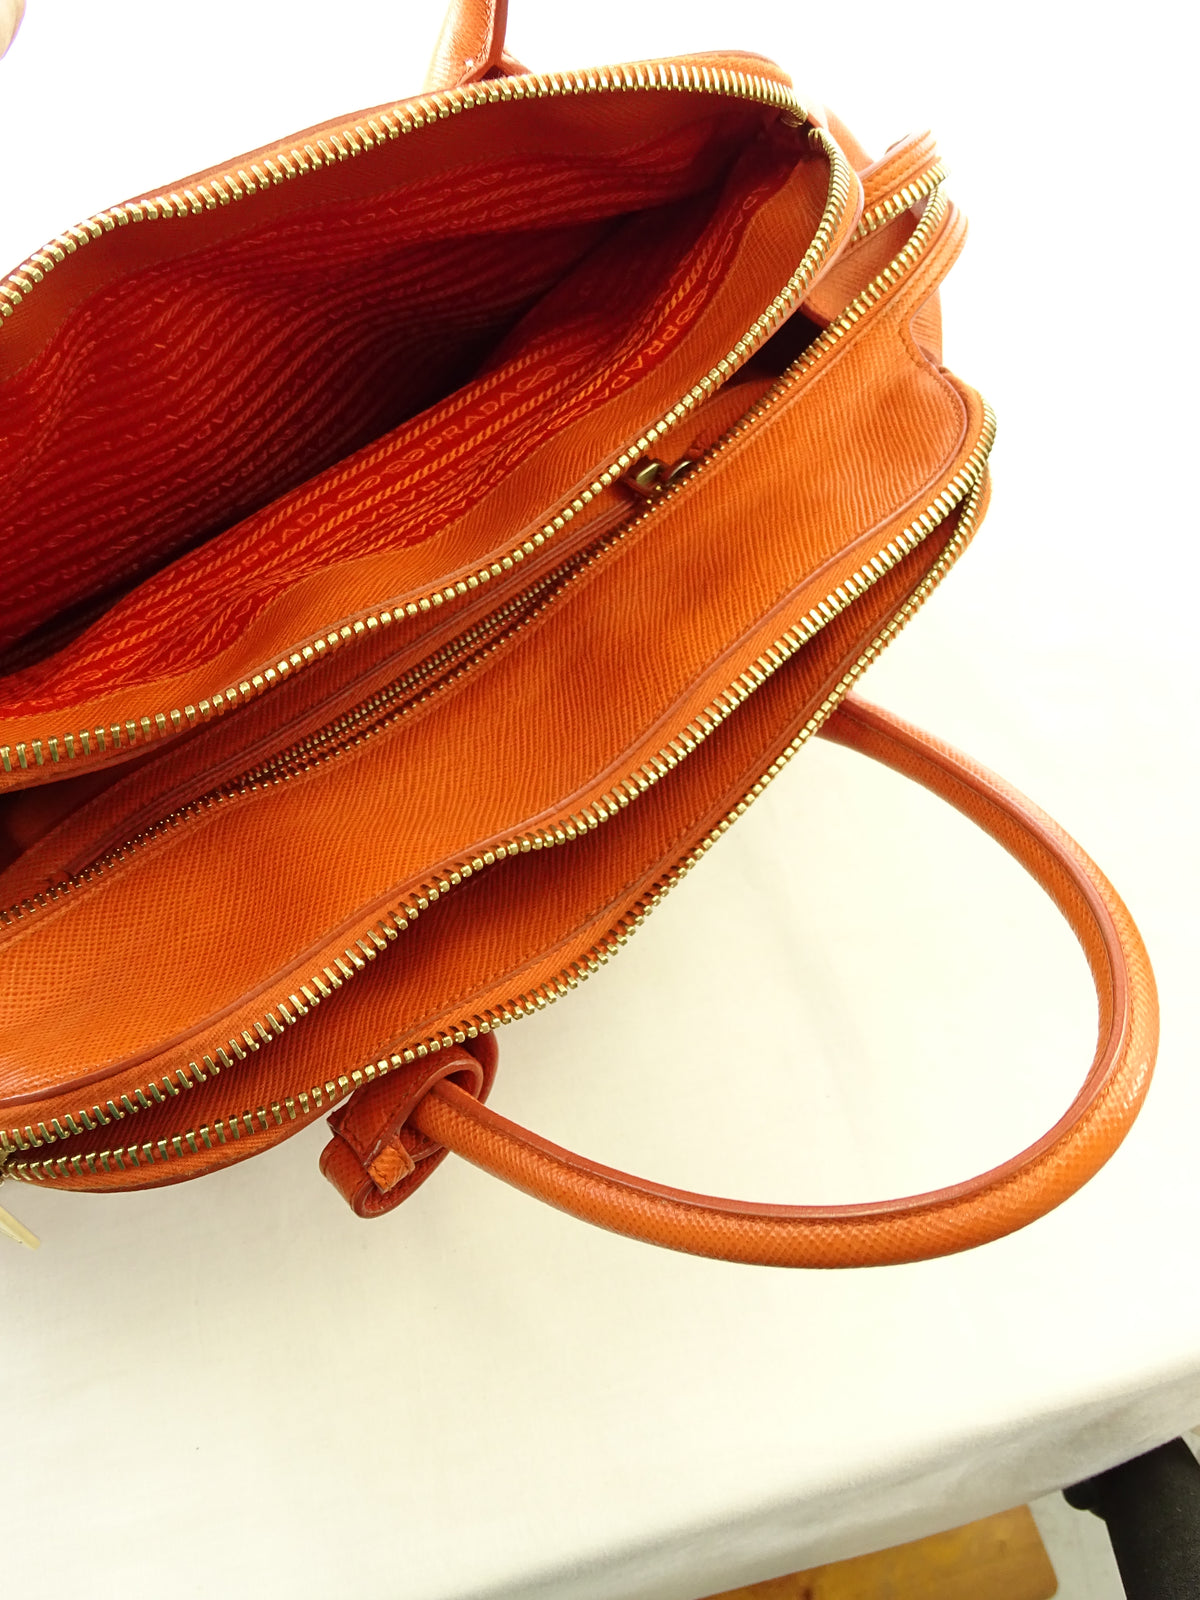 Prada Milano Orange Shoulder Bag